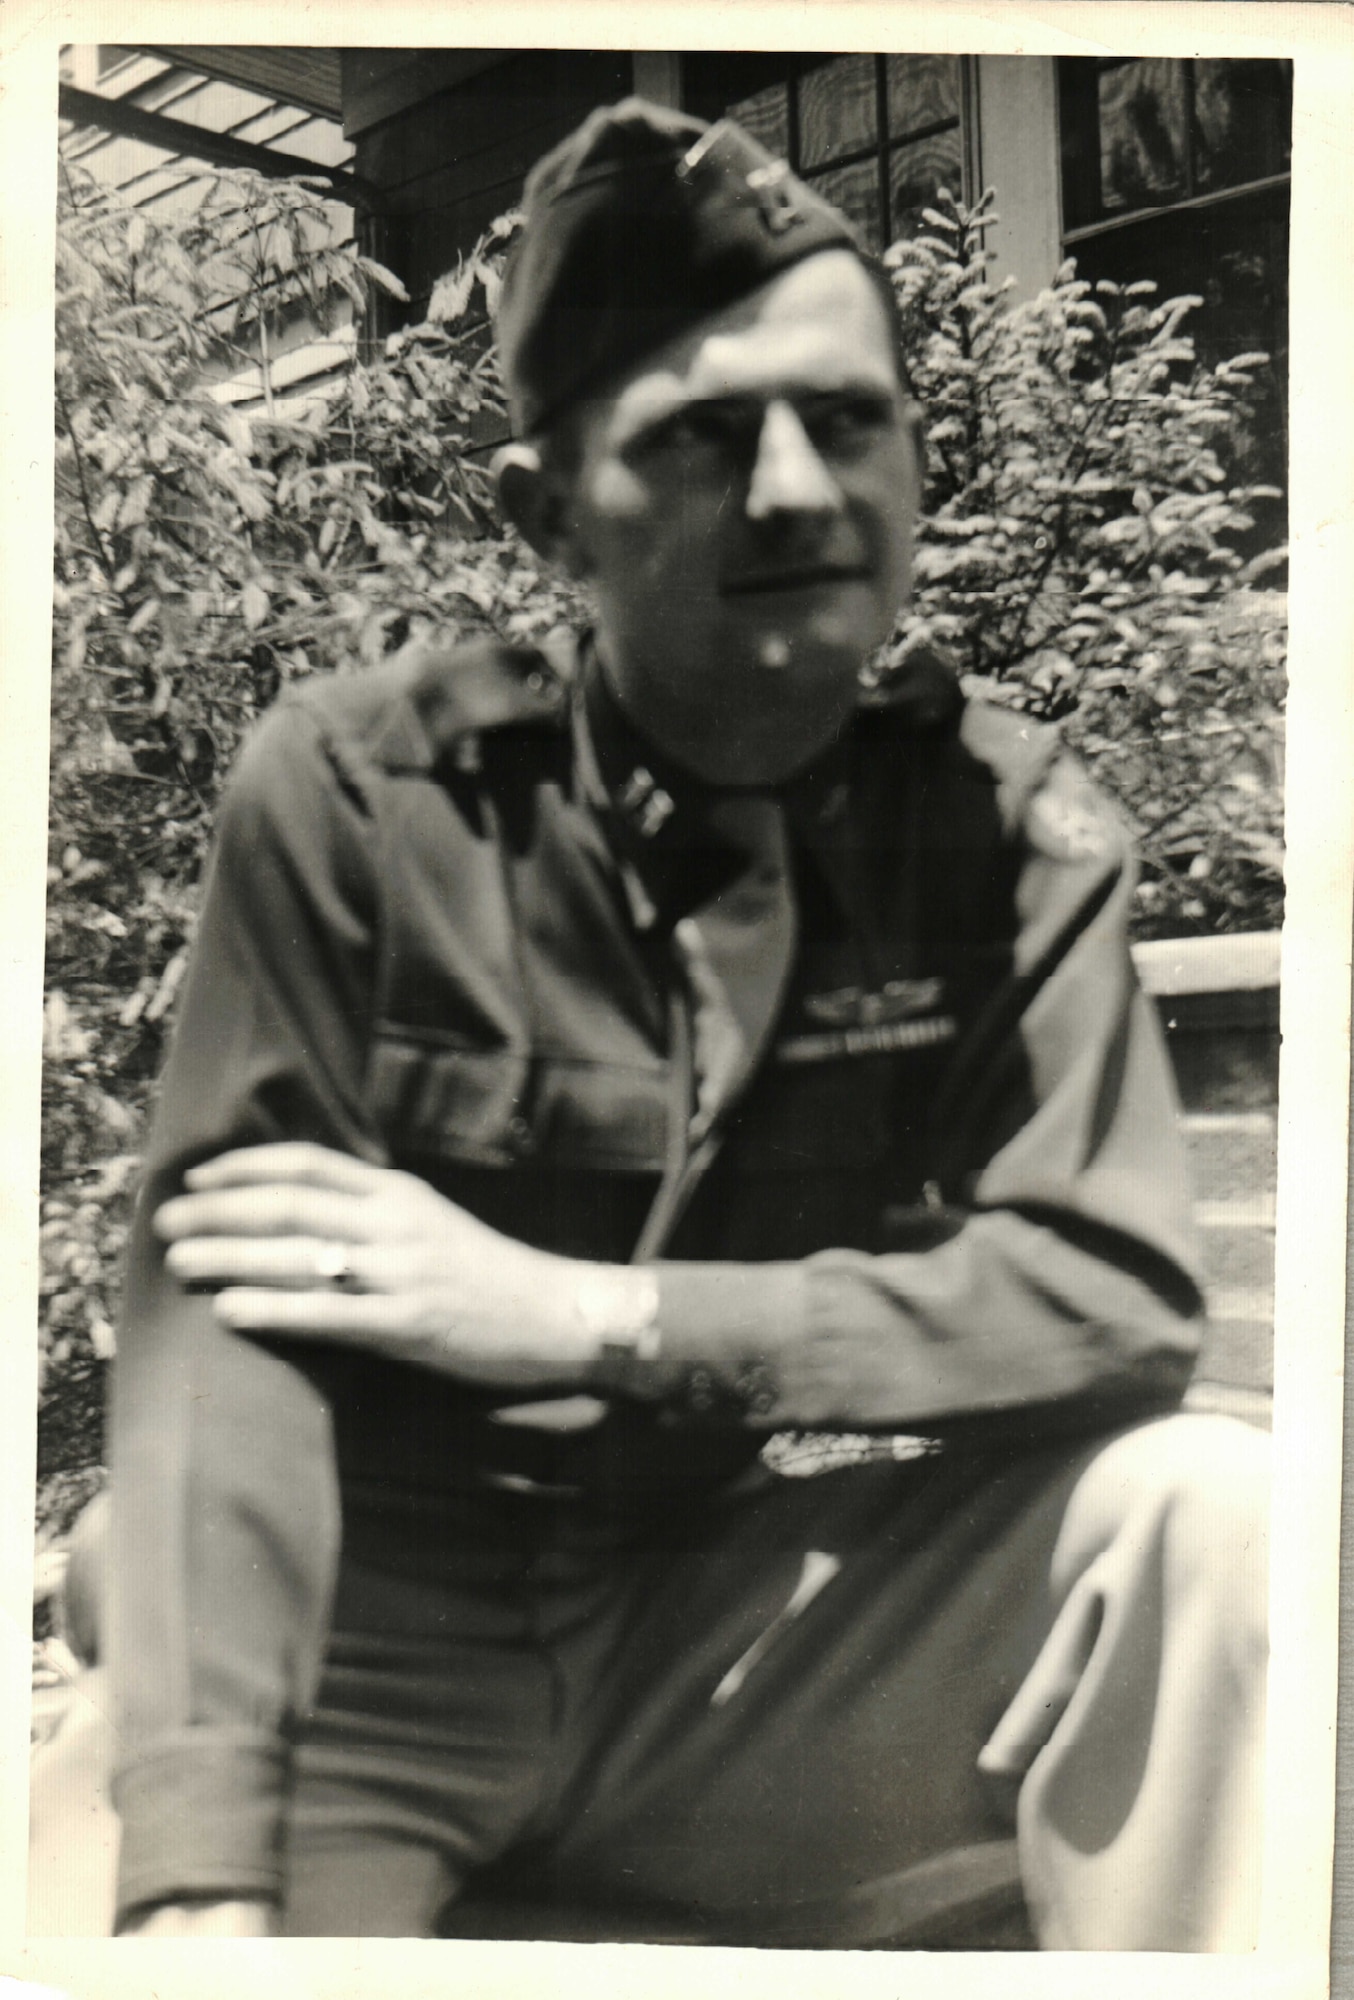 Capt. William Schneider circa 1943